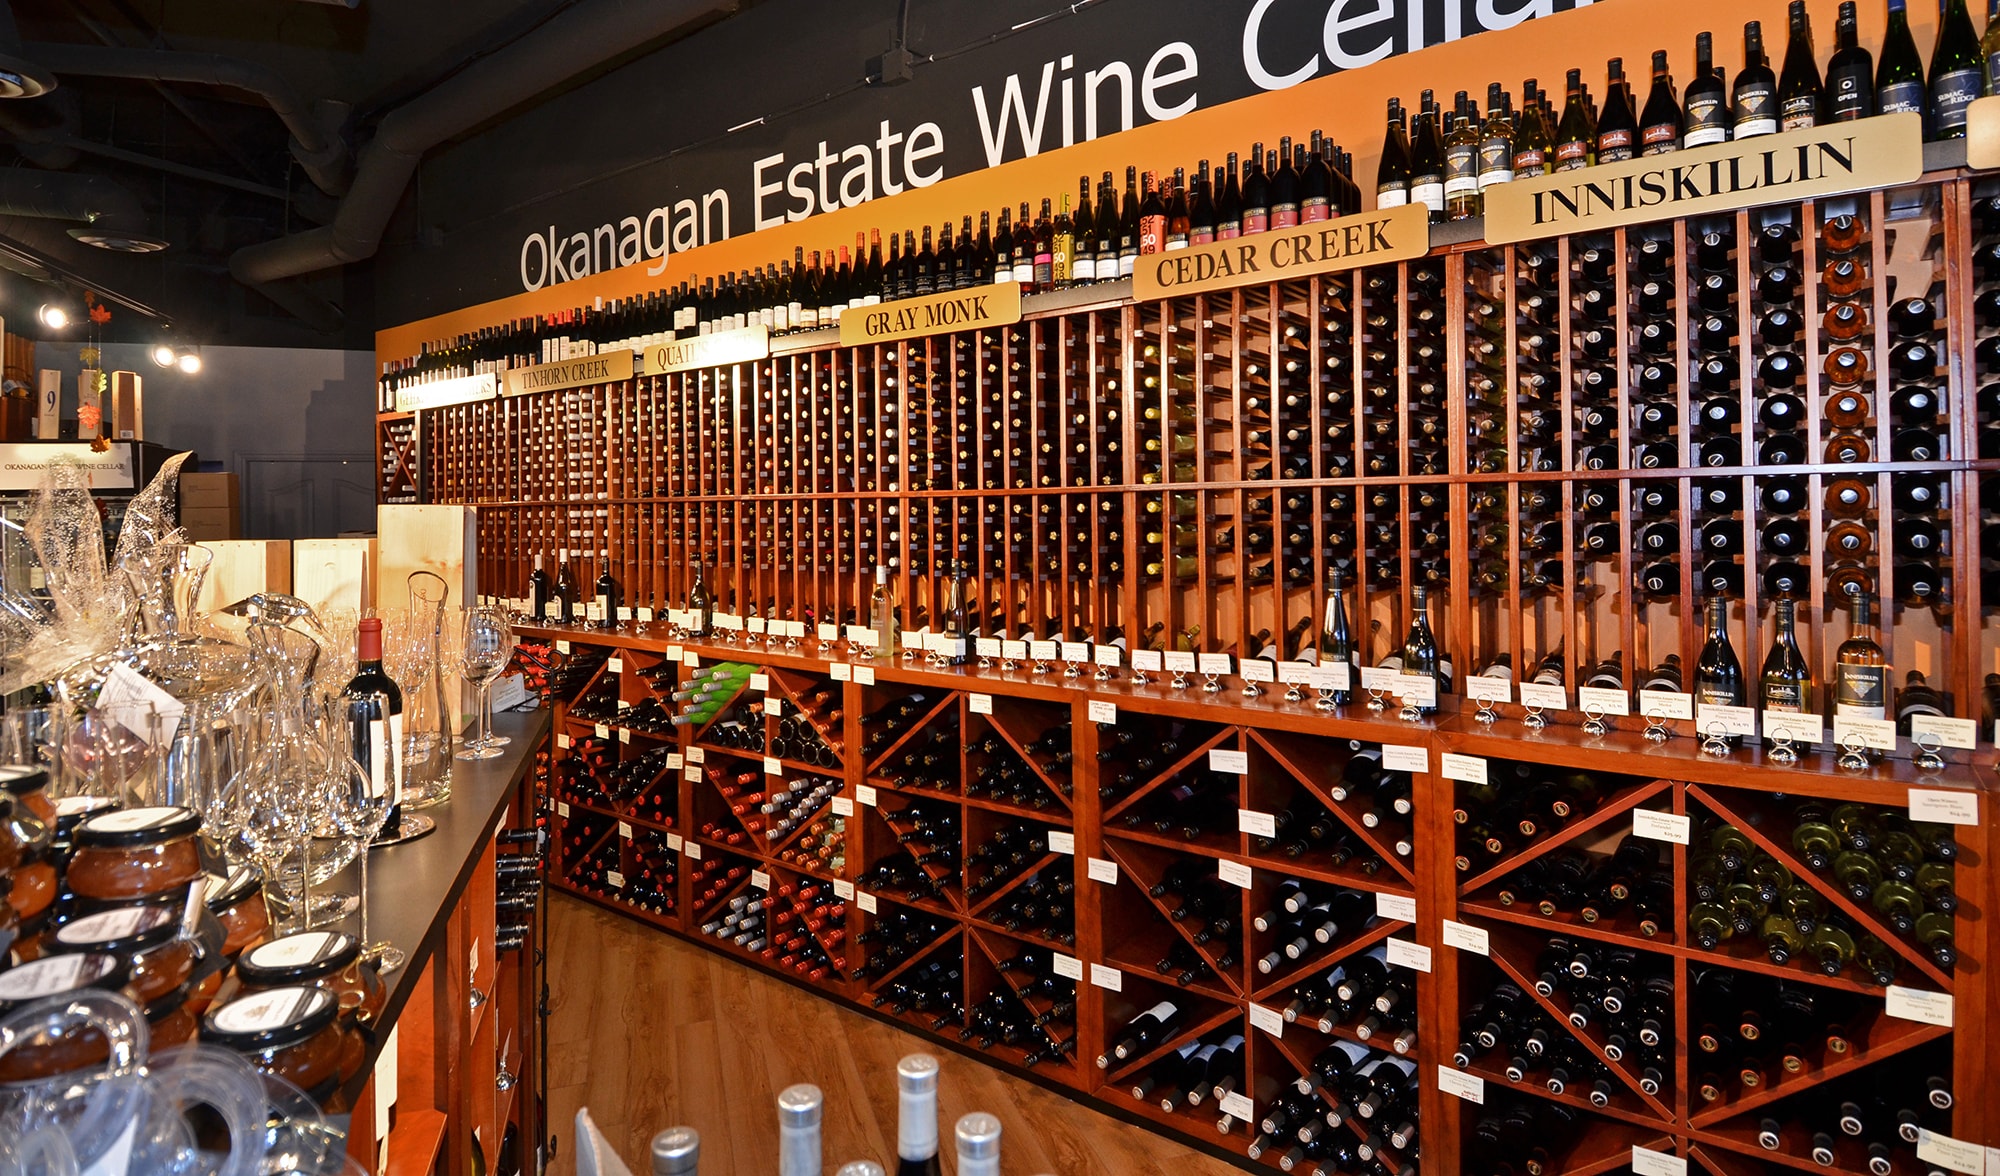 Okanagan Estate Wine Cellar